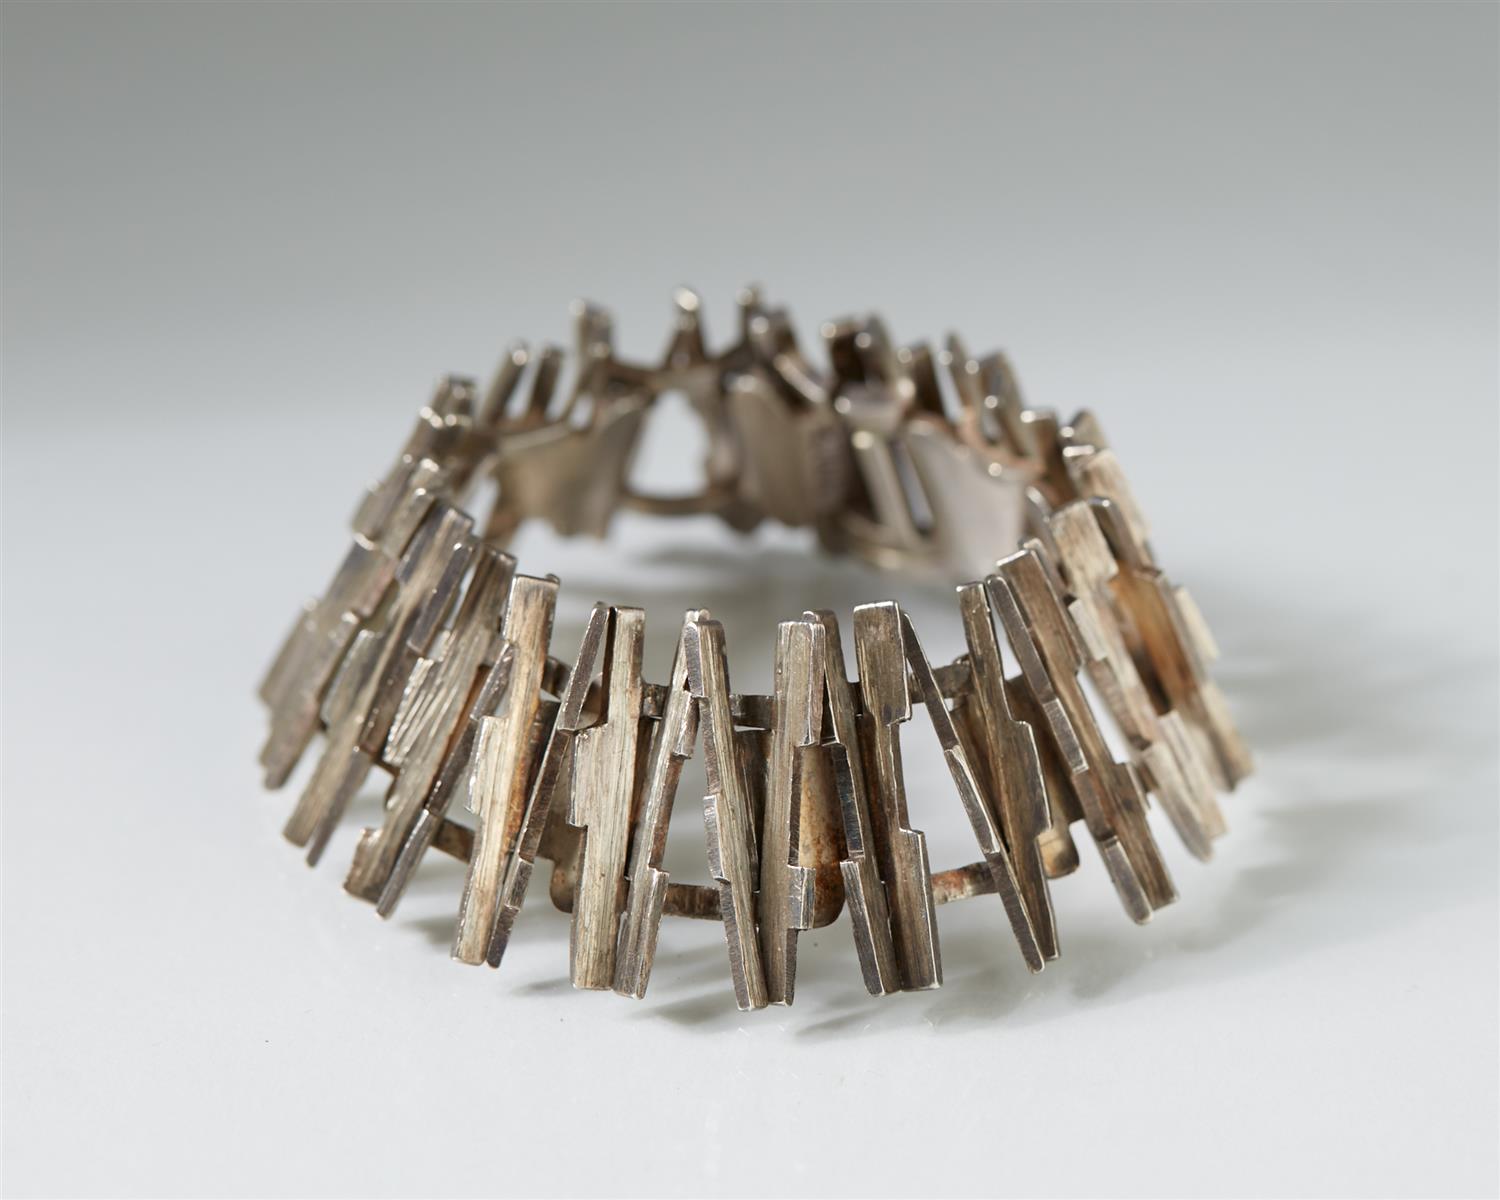 Bracelet designed by Rey Urban, — Modernity